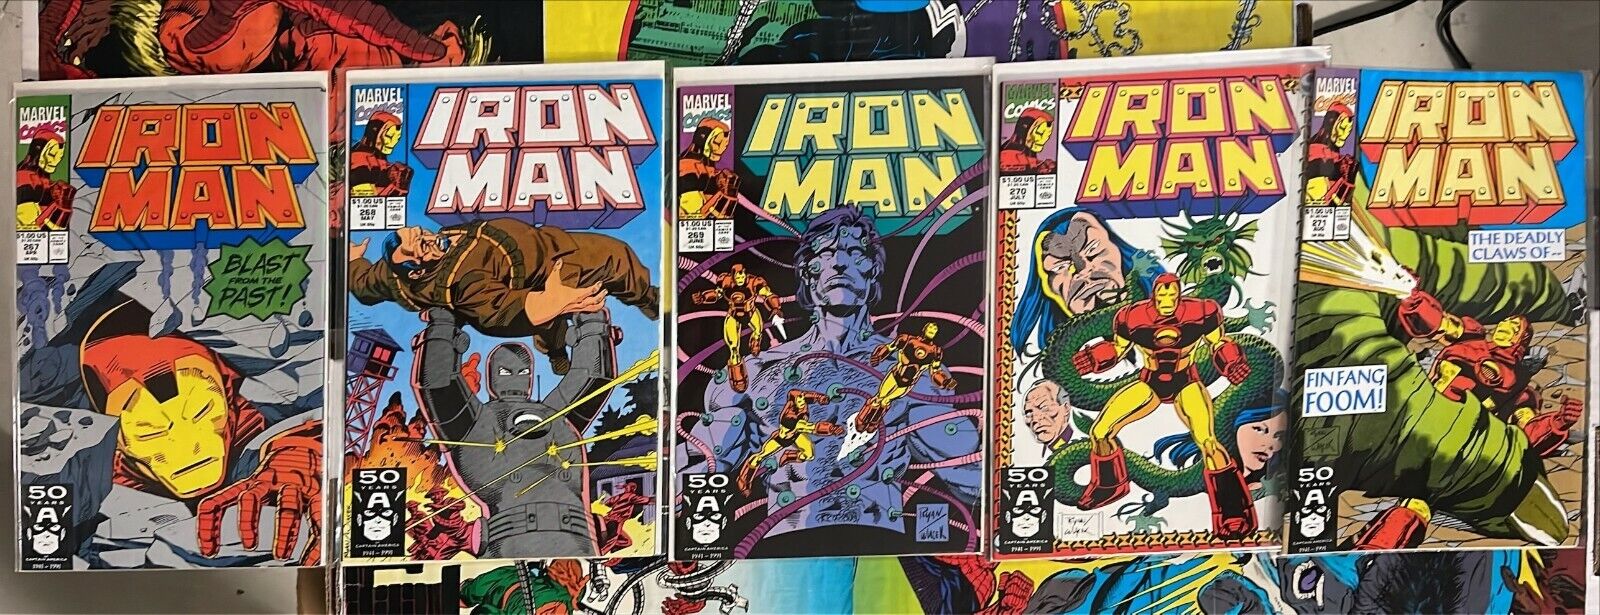 Iron Man #267, 268, 269, 270 & 271 Lot of 5 Marvel Comics 1991 Fin Fang Foom